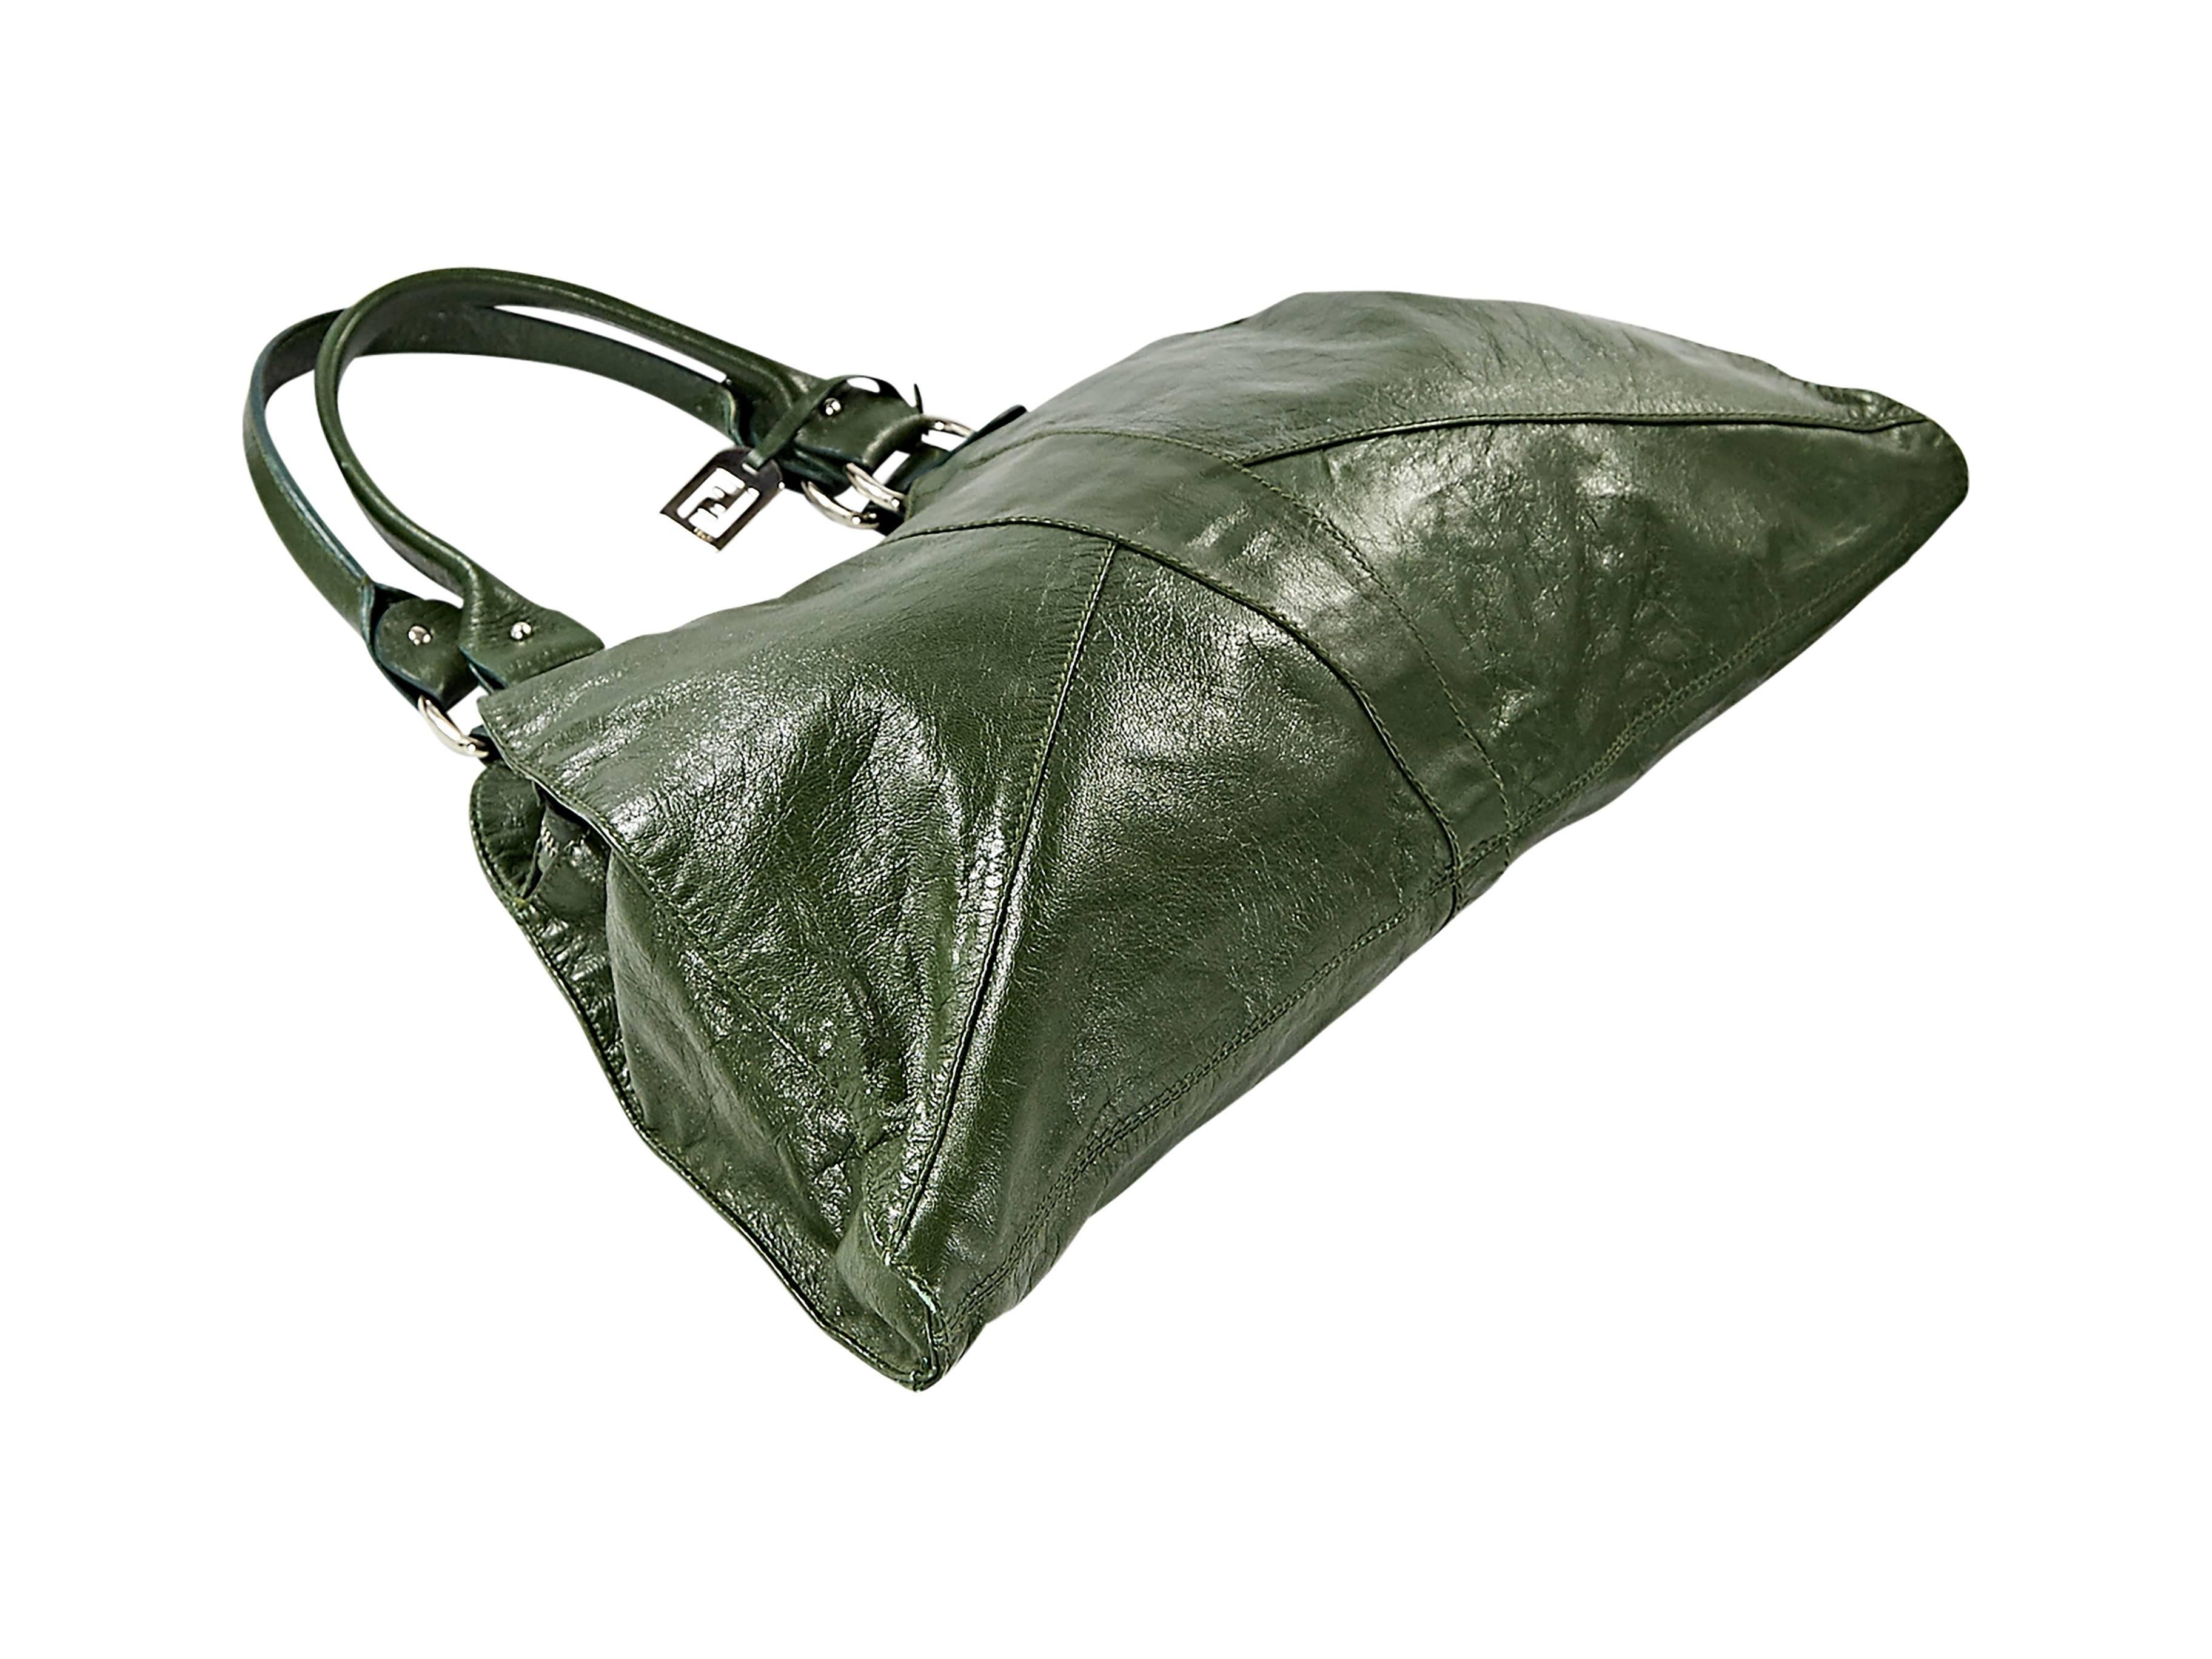 Green leather Diavolo Trapezio bag by Fendi.  Double shoulder strap.  Top zip closure.  Lined interior with zip-close pocket.  Silvertone hardware.  19